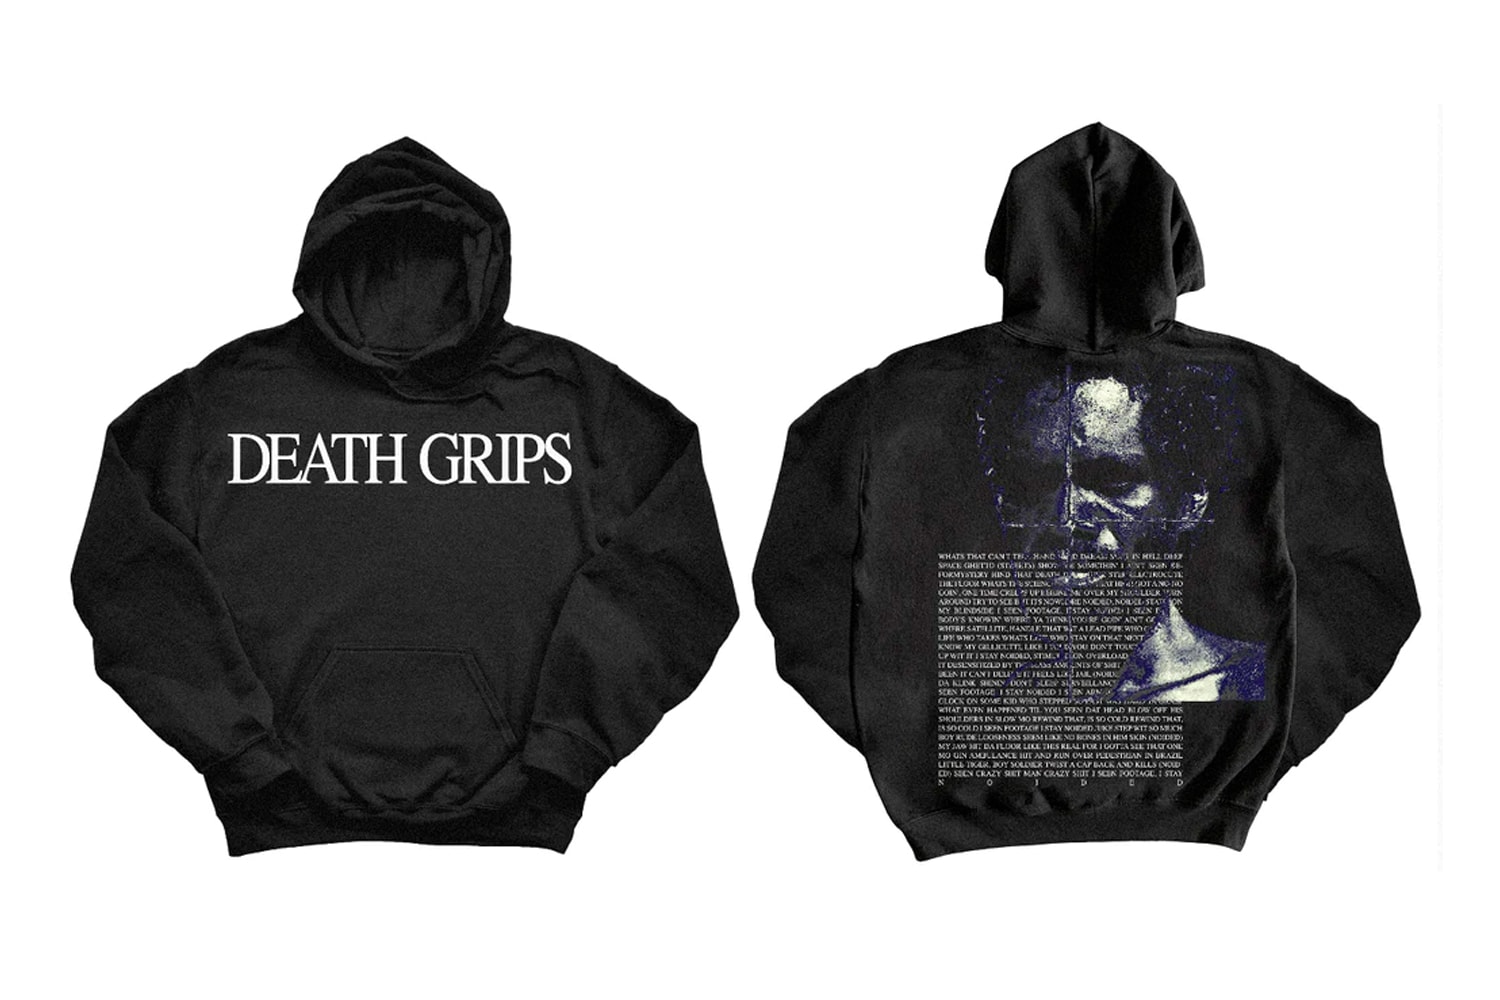 Praying 正式推出攜手實驗性饒舌團體 Death Grips 打造最新聯名系列